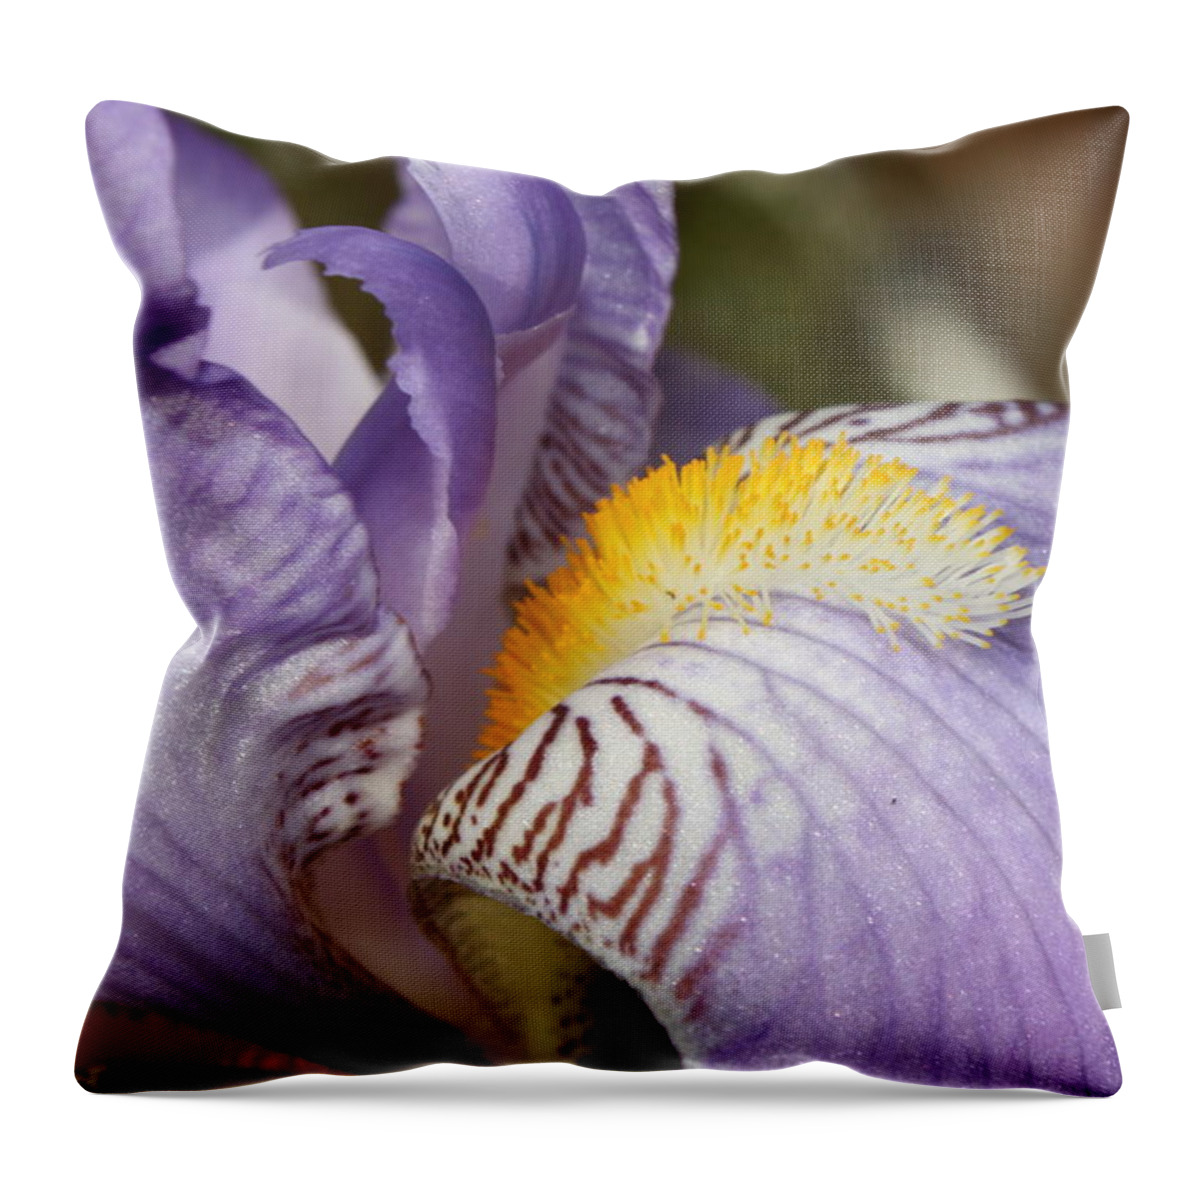 Iris Throw Pillow featuring the photograph Purple Iris Closeup by Carol Groenen